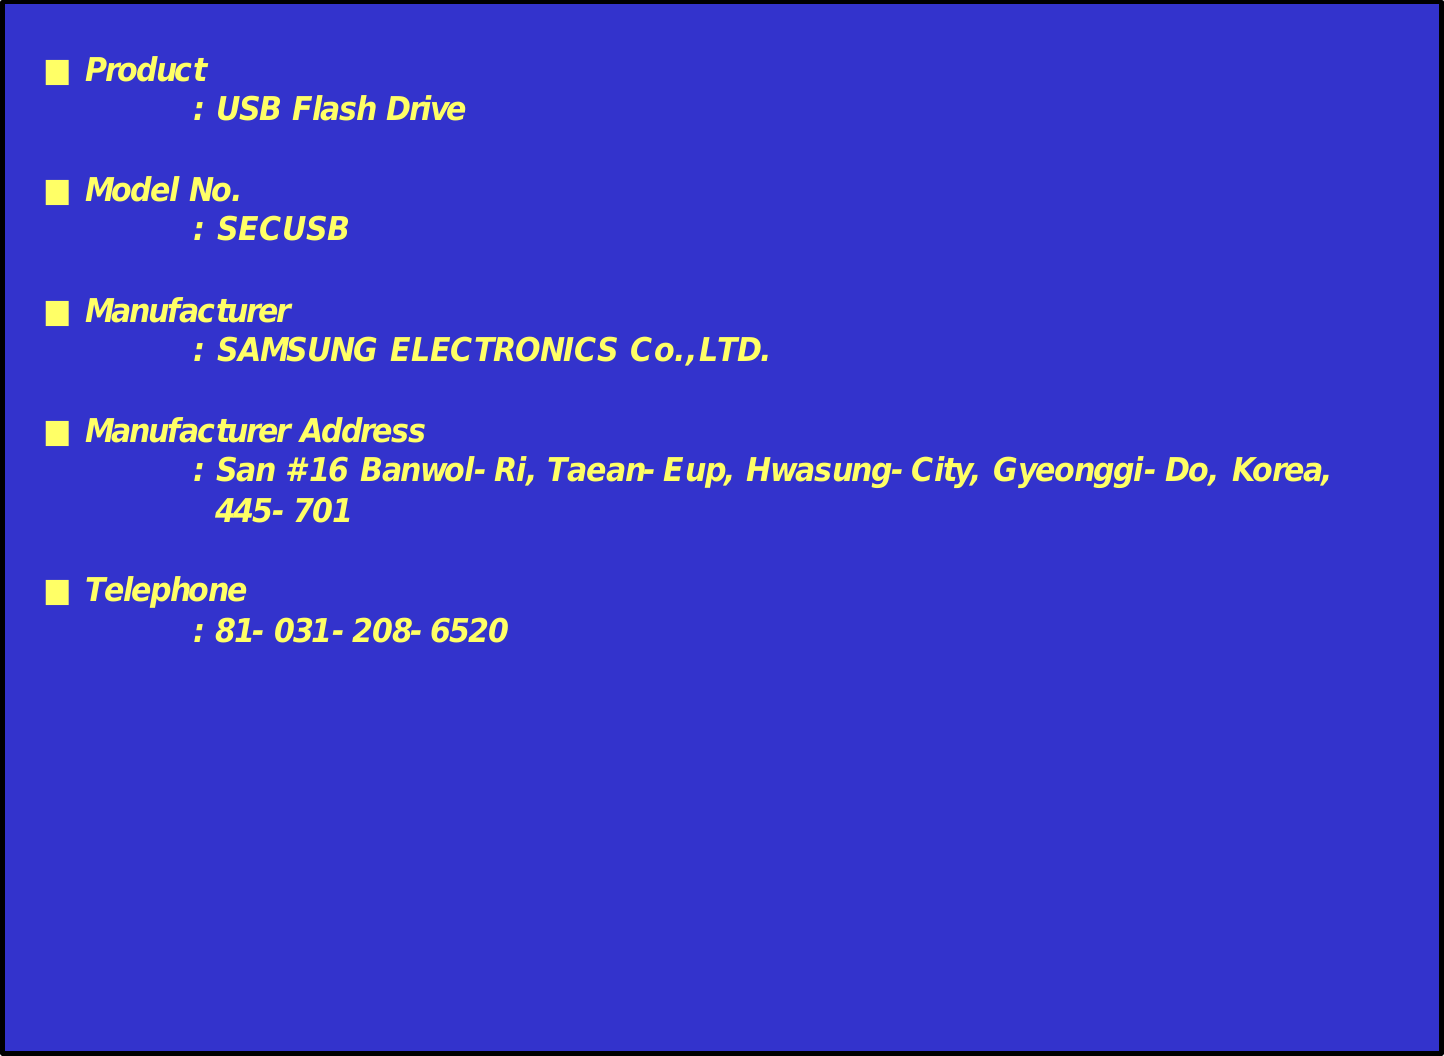 ■Product: USB Flash Drive■Model No.: SECUSB■Manufacturer: SAMSUNG ELECTRONICS Co.,LTD.■Manufacturer Address: San #16 Banwol-Ri,Taean-Eup, Hwasung-City, Gyeonggi-Do, Korea,445-701■Telephone: 81-031-208-6520